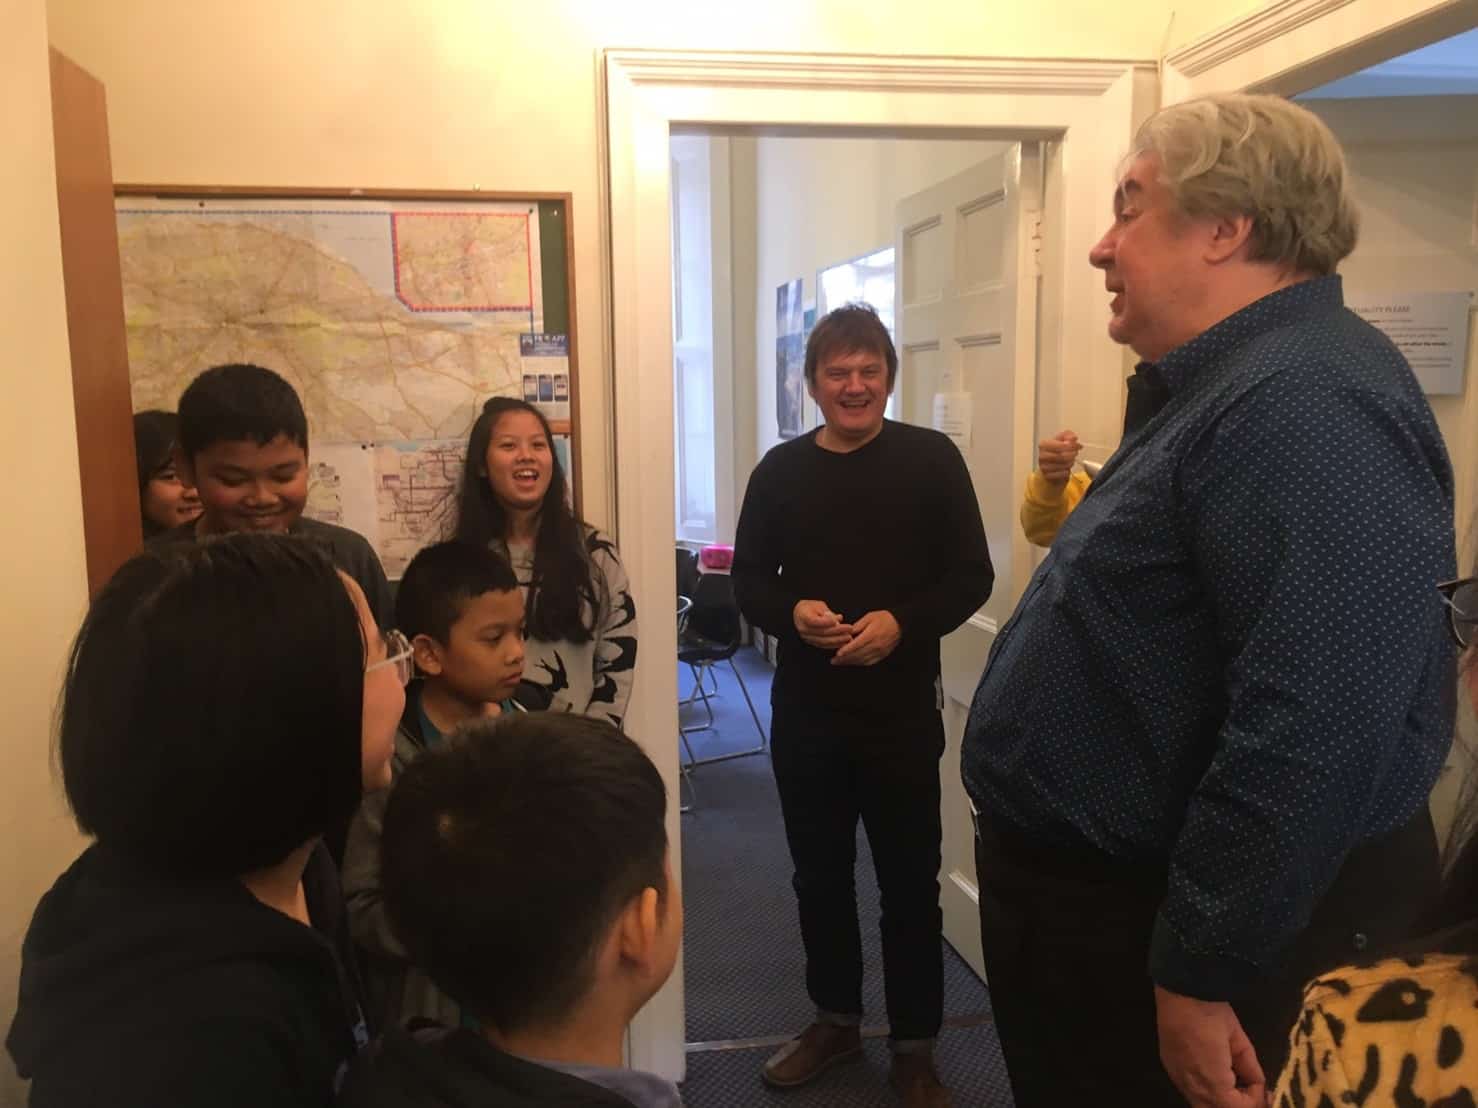 Shane English School Thailand visit Caledonian Language School in Edinburgh, Scotland